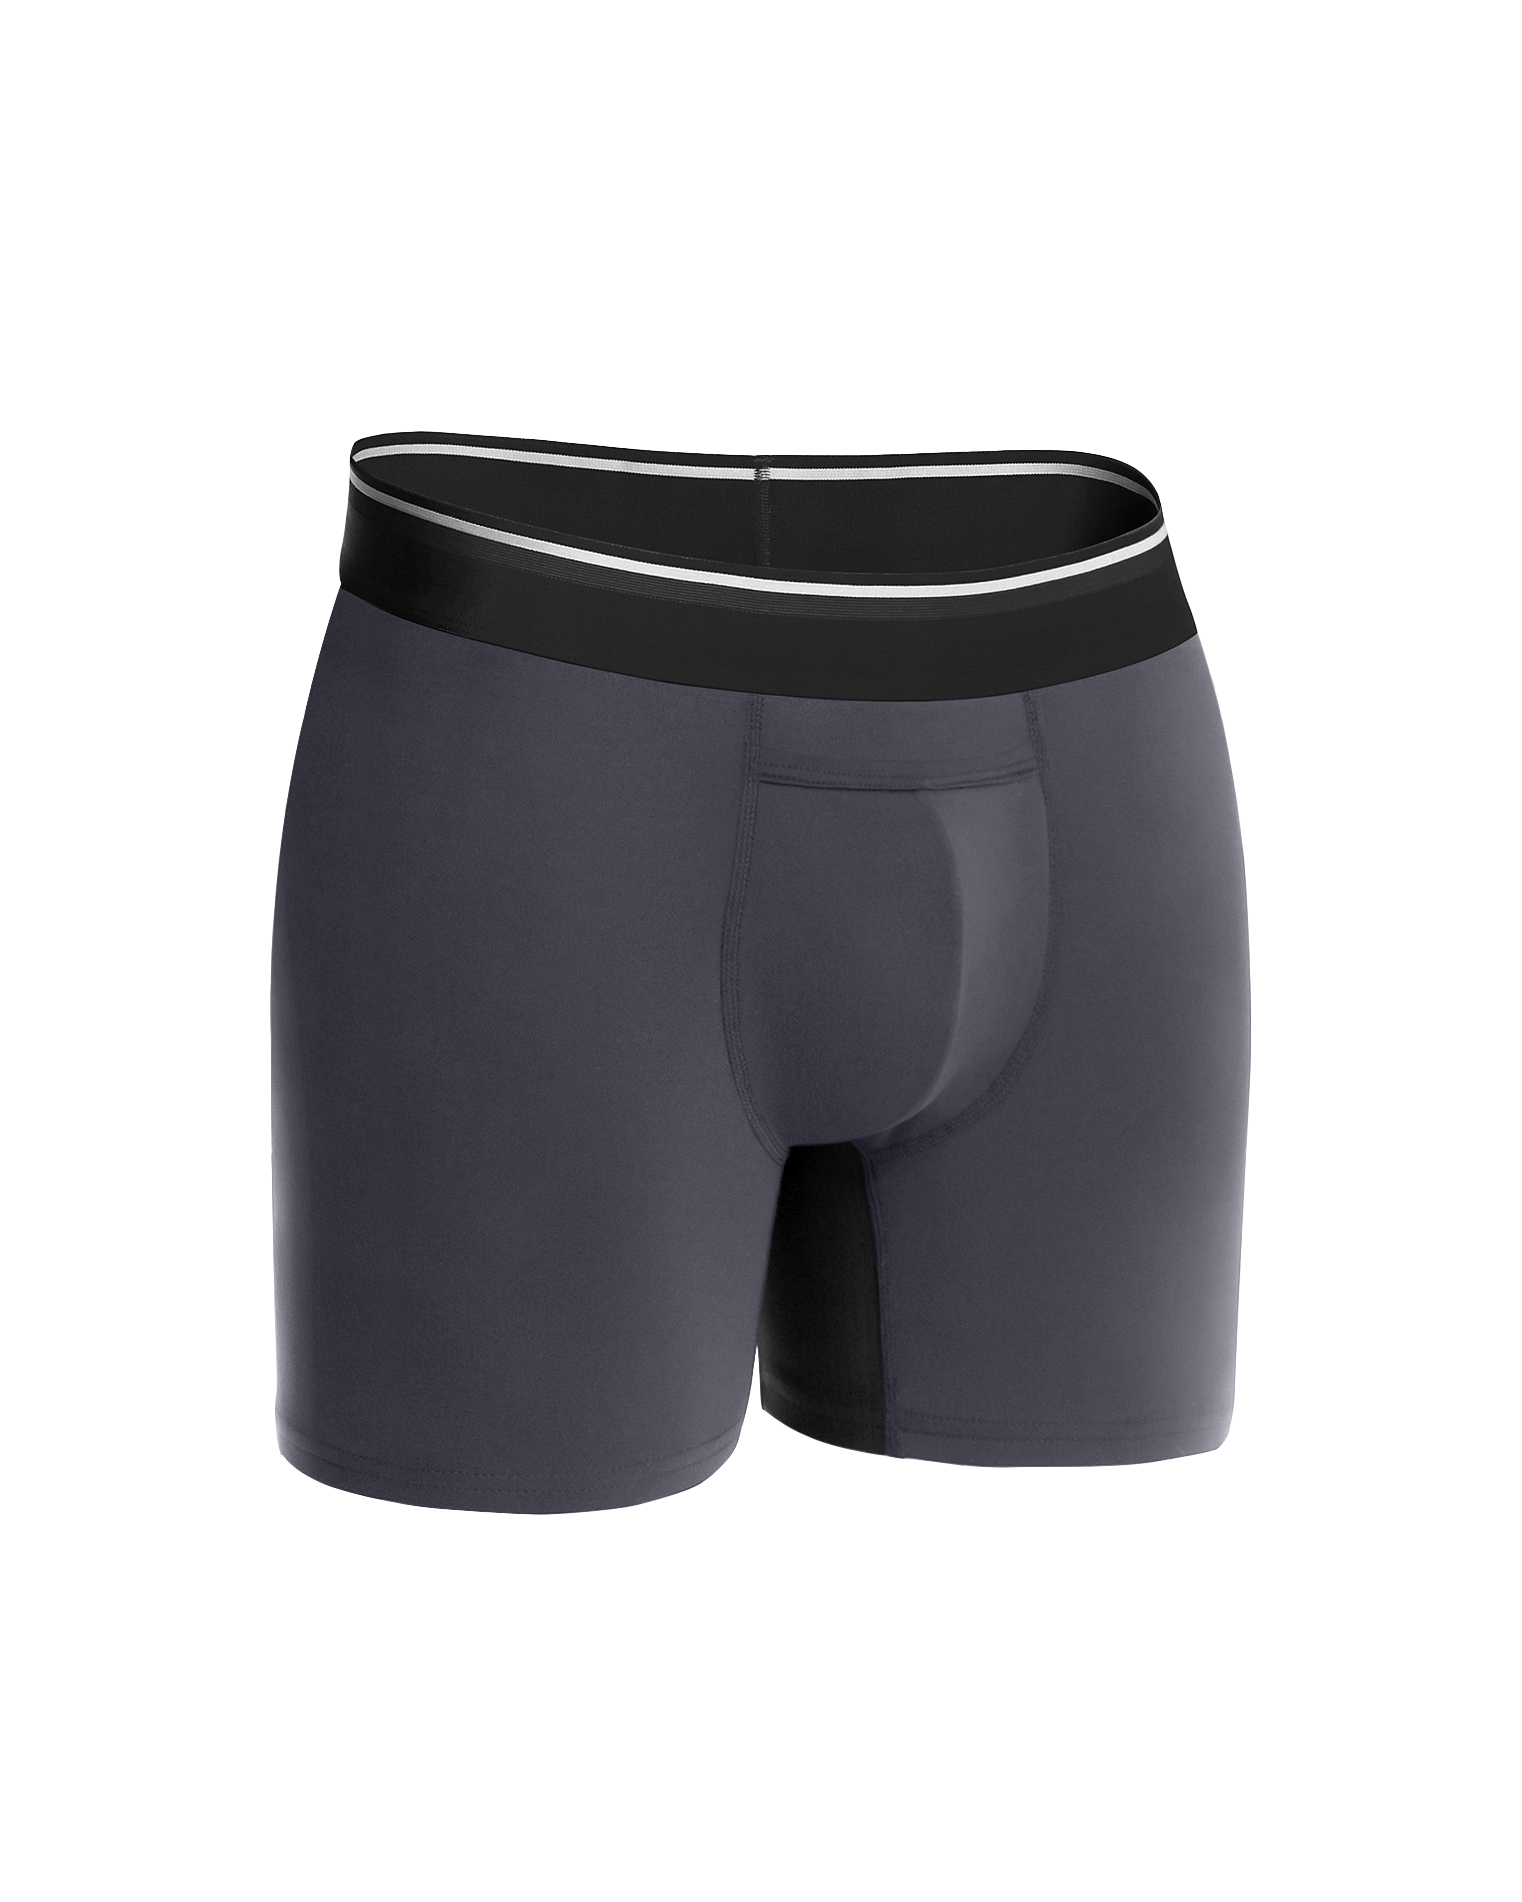 Underwear Men's Regular For All Seasons Large Size Comfortable